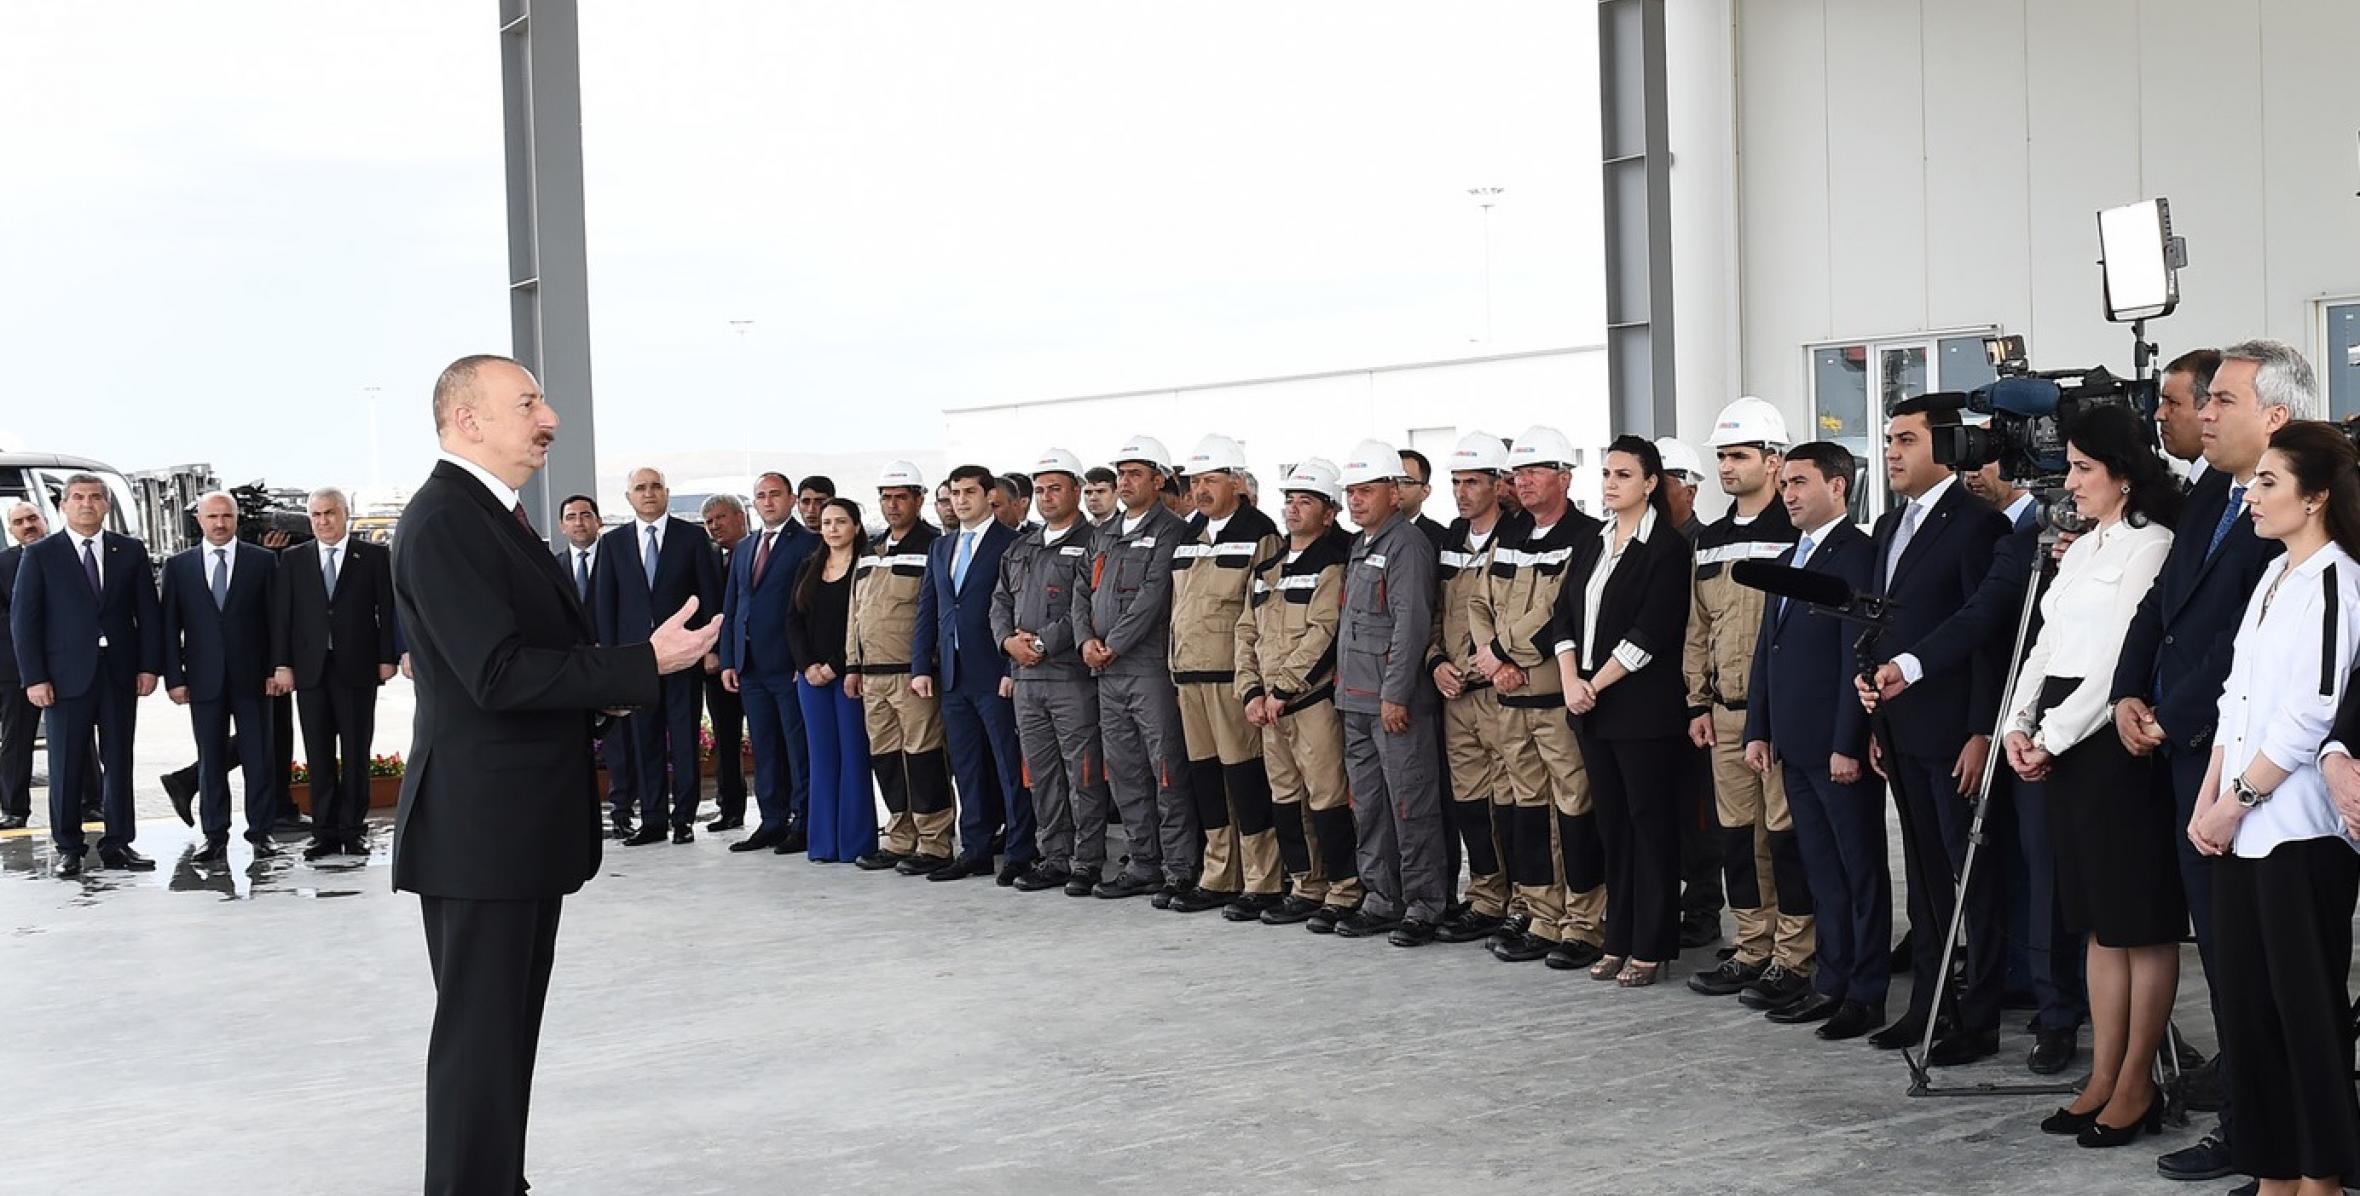 Speech by Ilham Aliyev at the opening of Baku International Sea Trade Port Complex